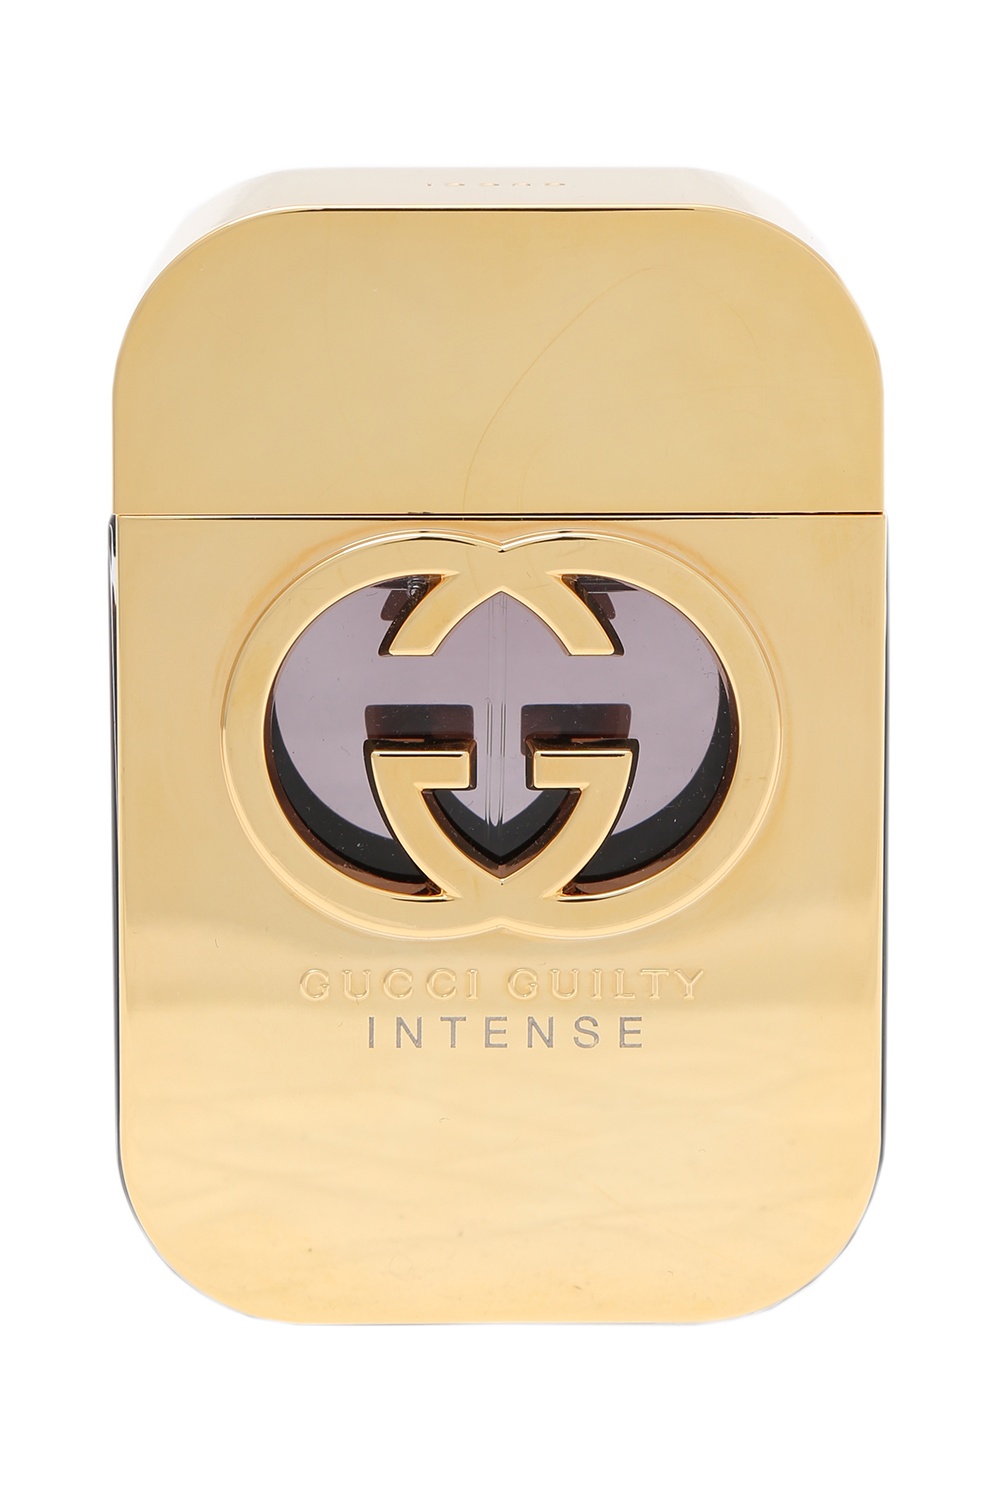 gucci guilty intense perfume 75ml